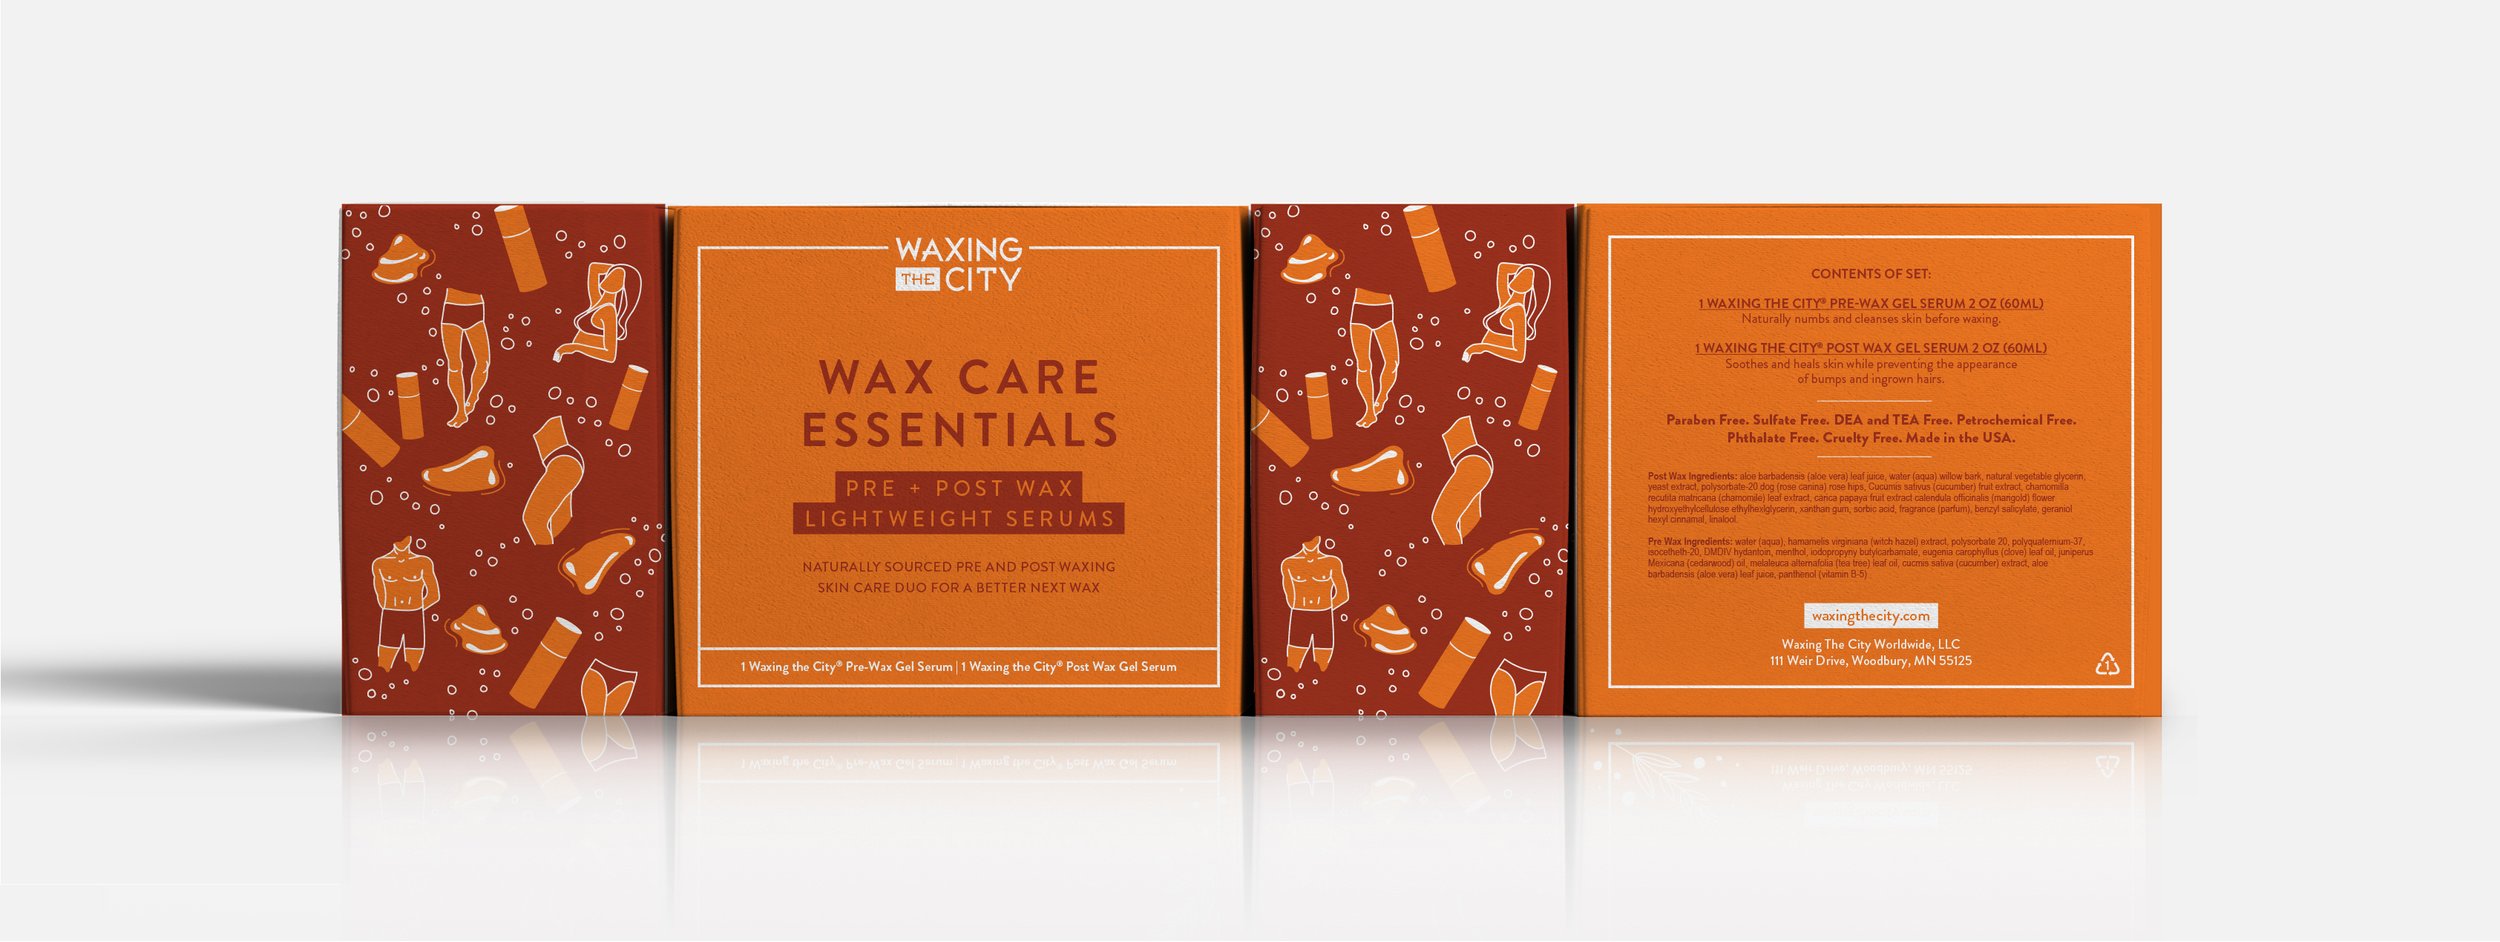 Wac-care-essentials-081722-G.jpg